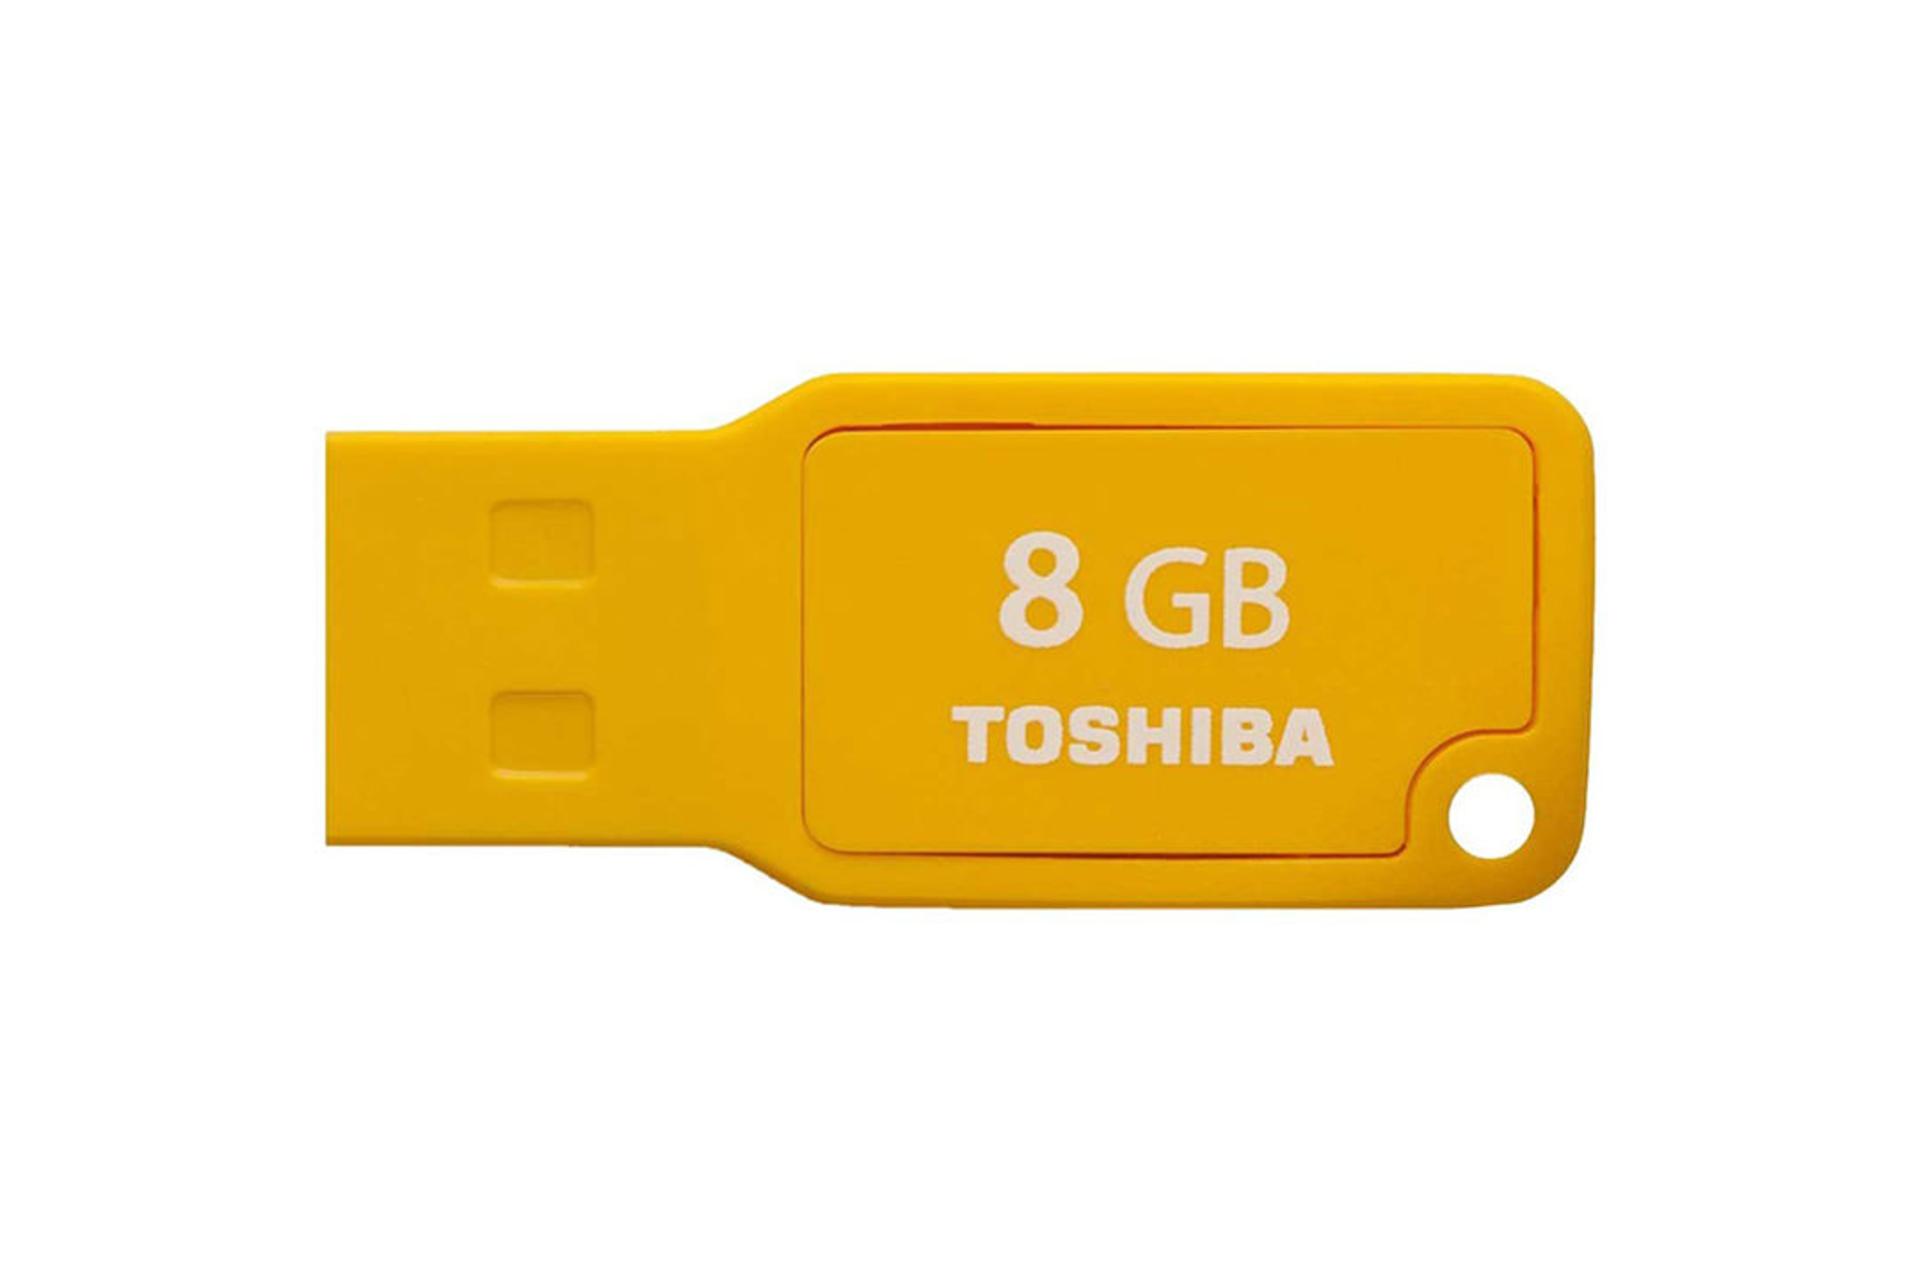 Toshiba Mikawa U201 8GB